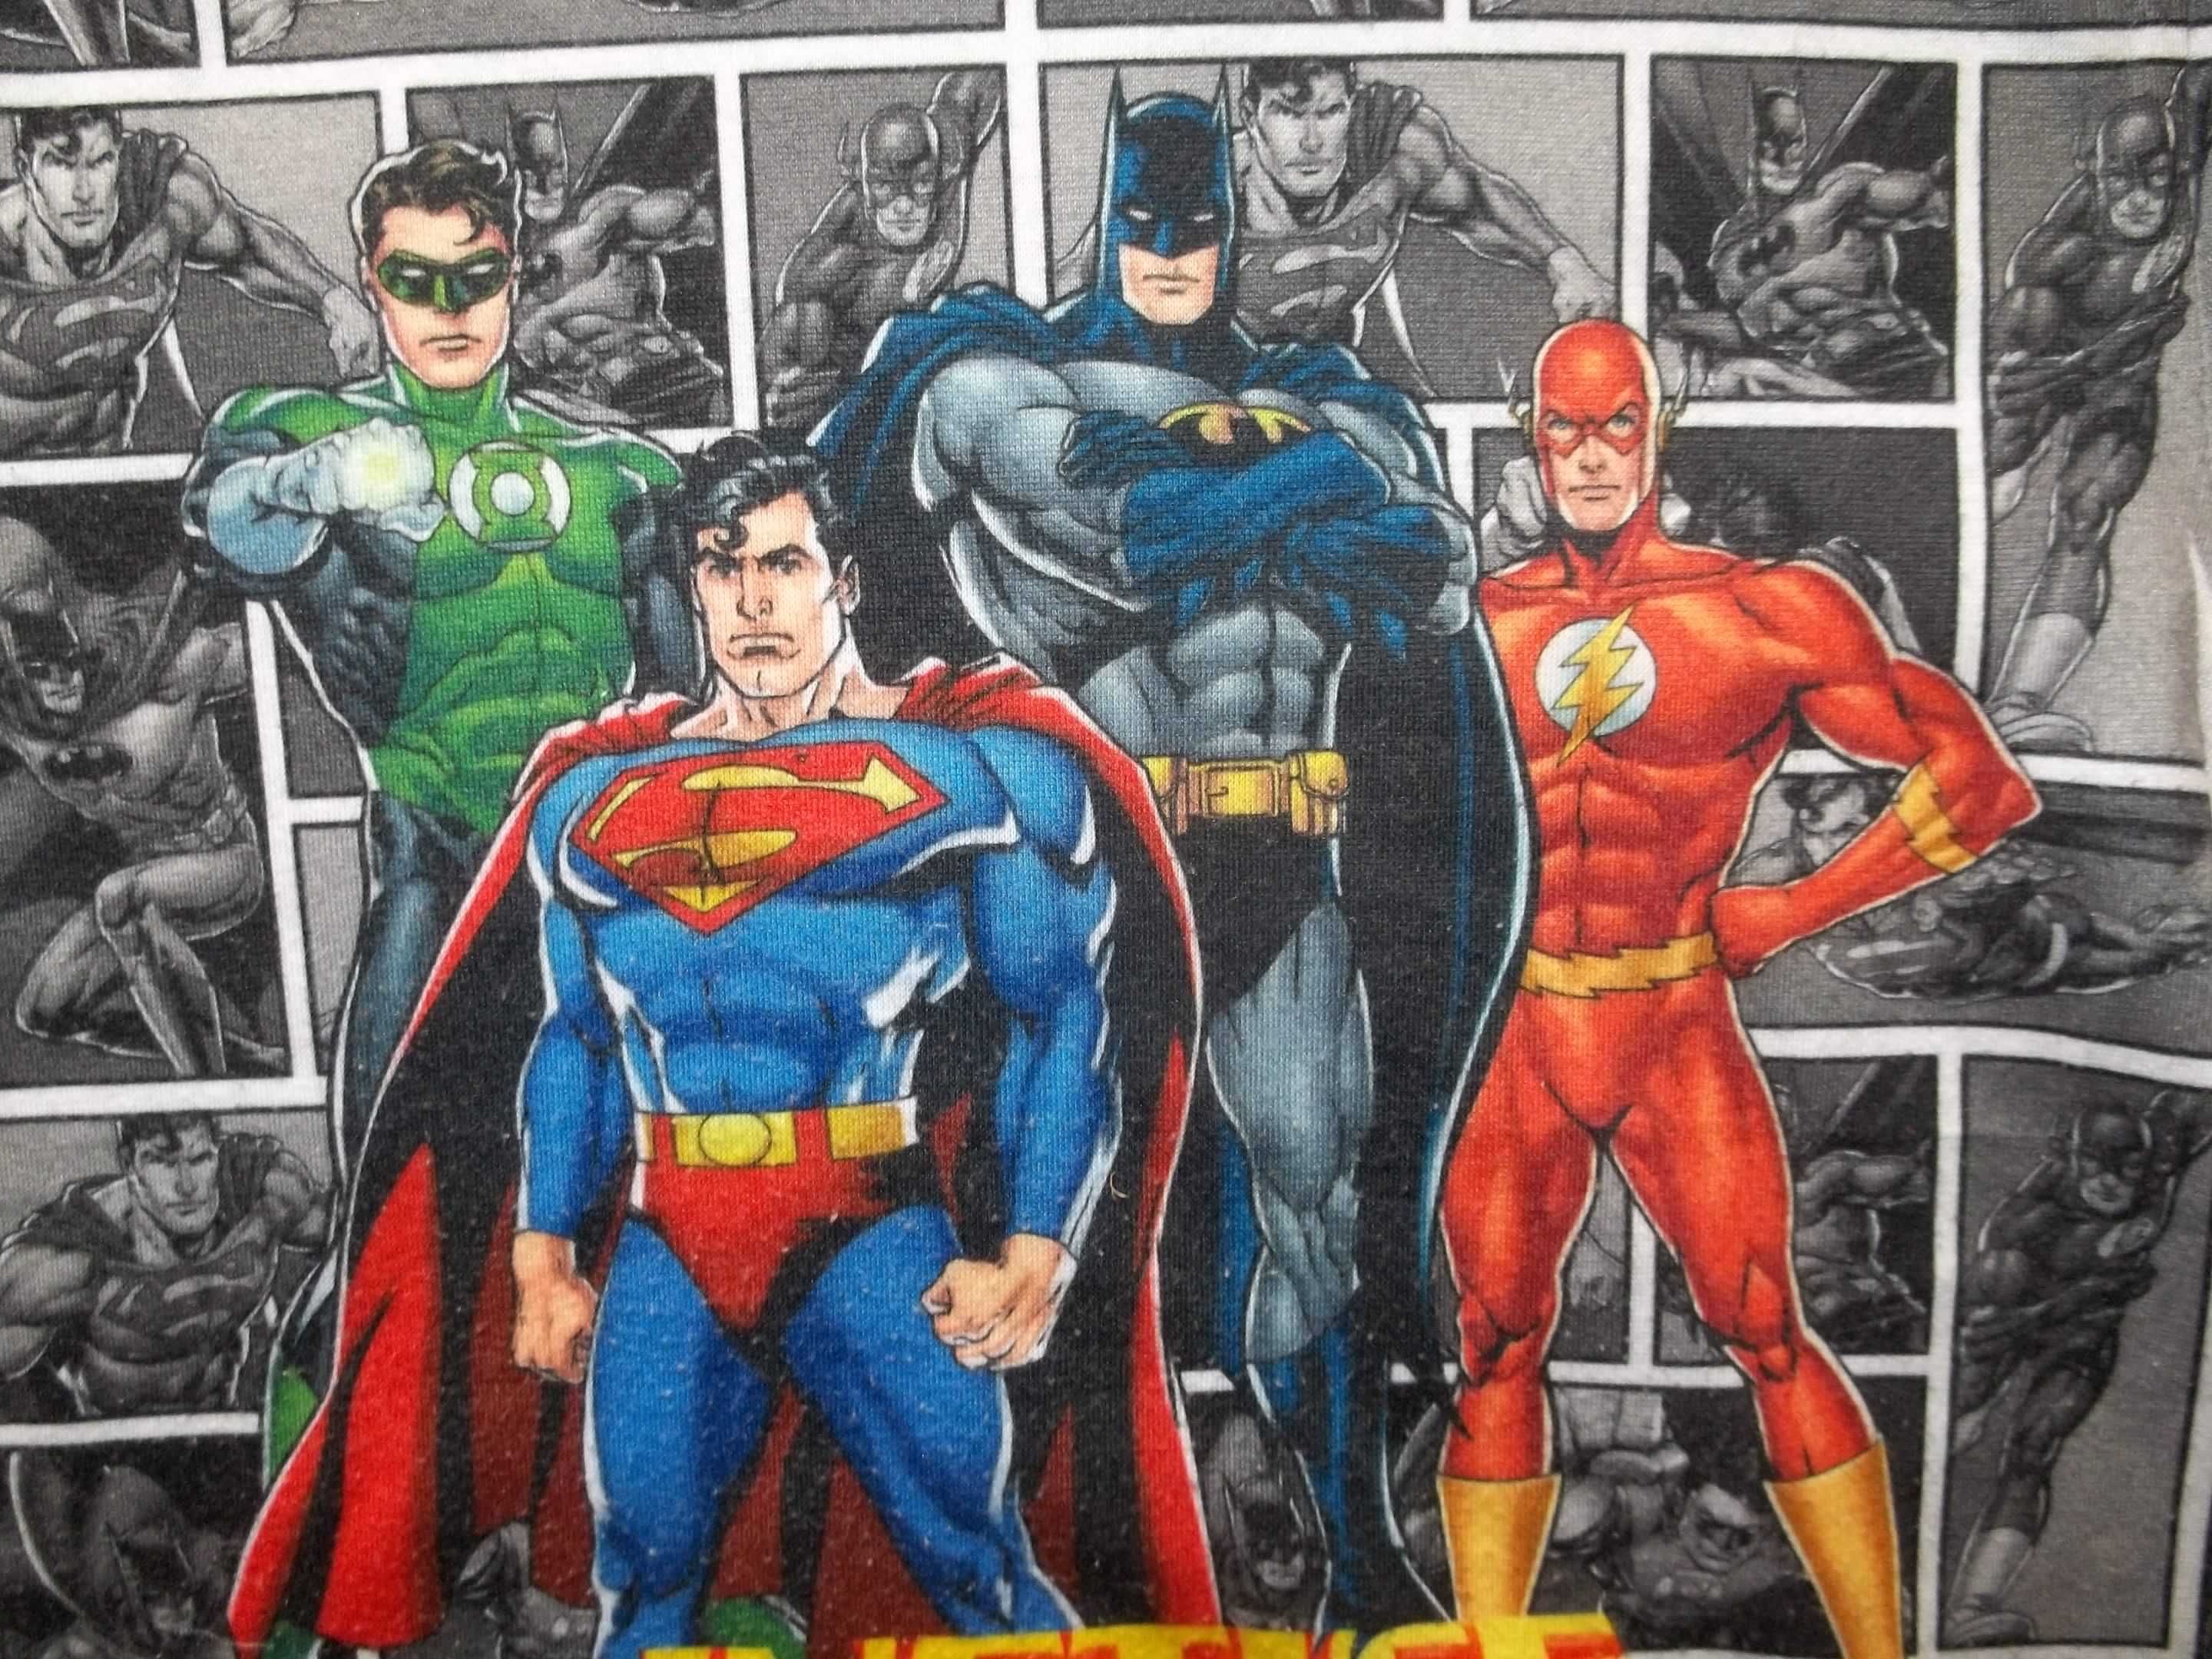 Bluzka AVENGERS Superman , Batman , Green Lauren , Flash   r.110